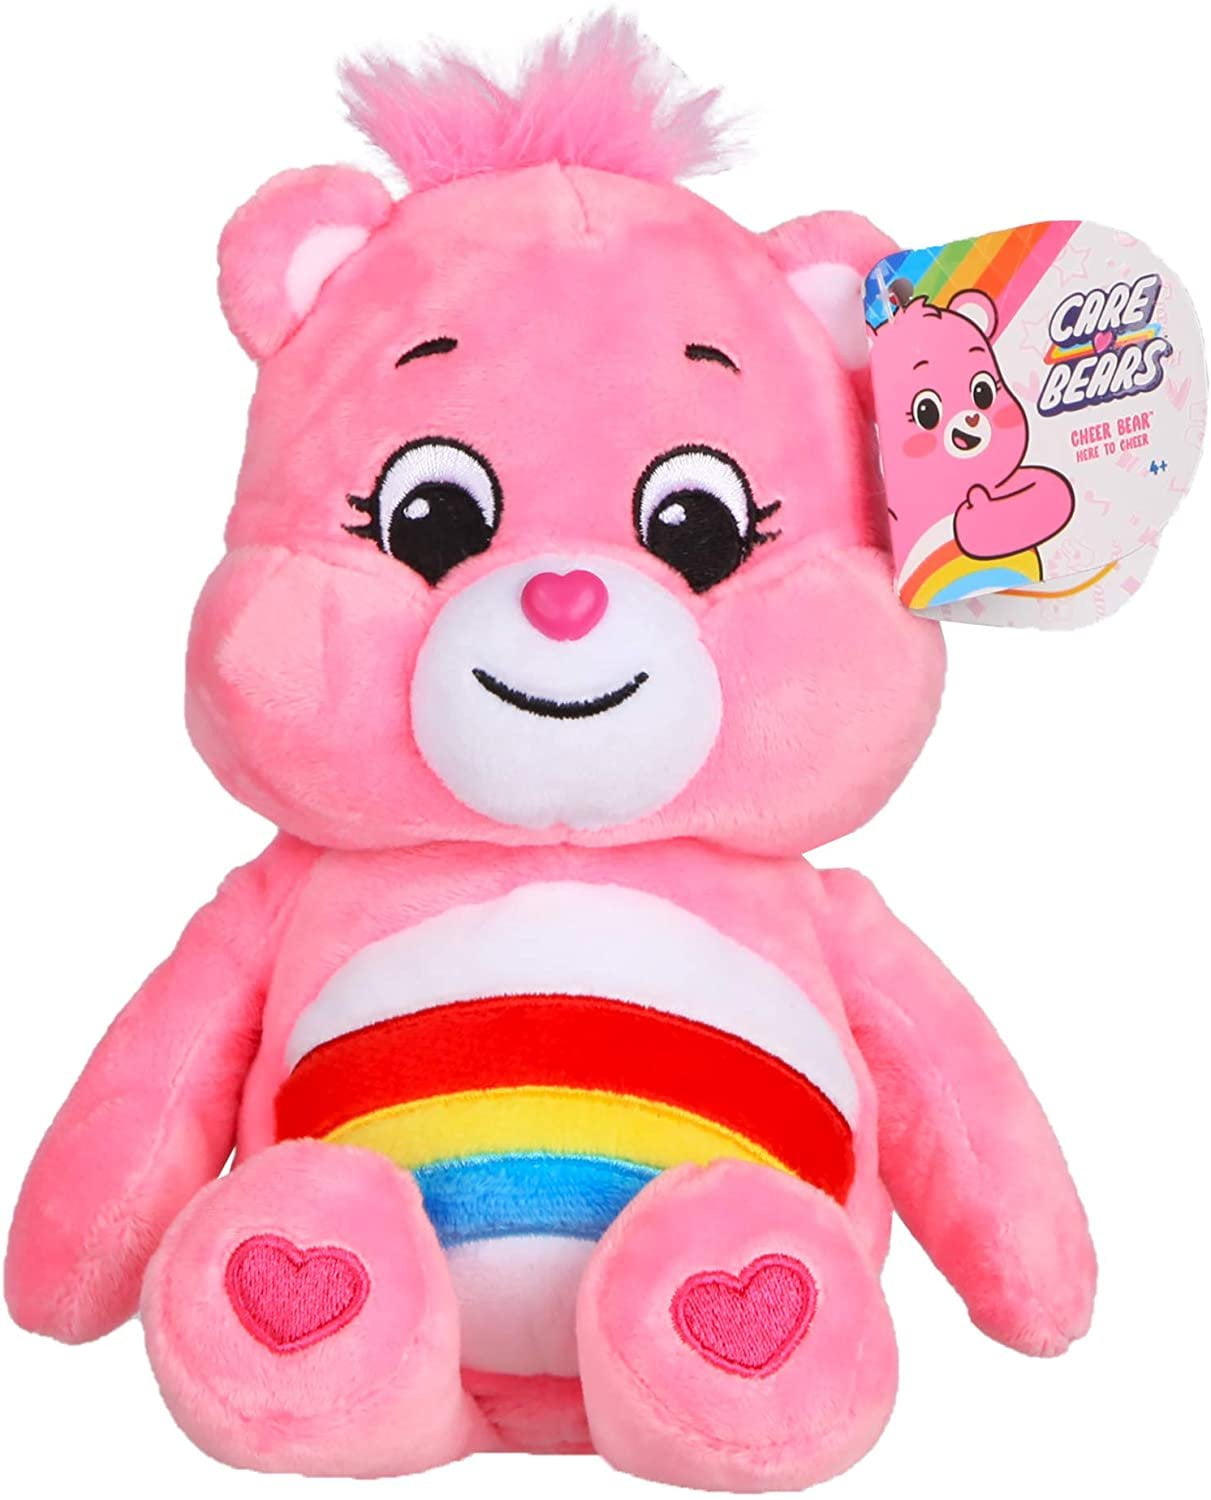 Huggable New 2020 Care Bears 14" Cheer Bear Plush Collectible Soft Lovable 